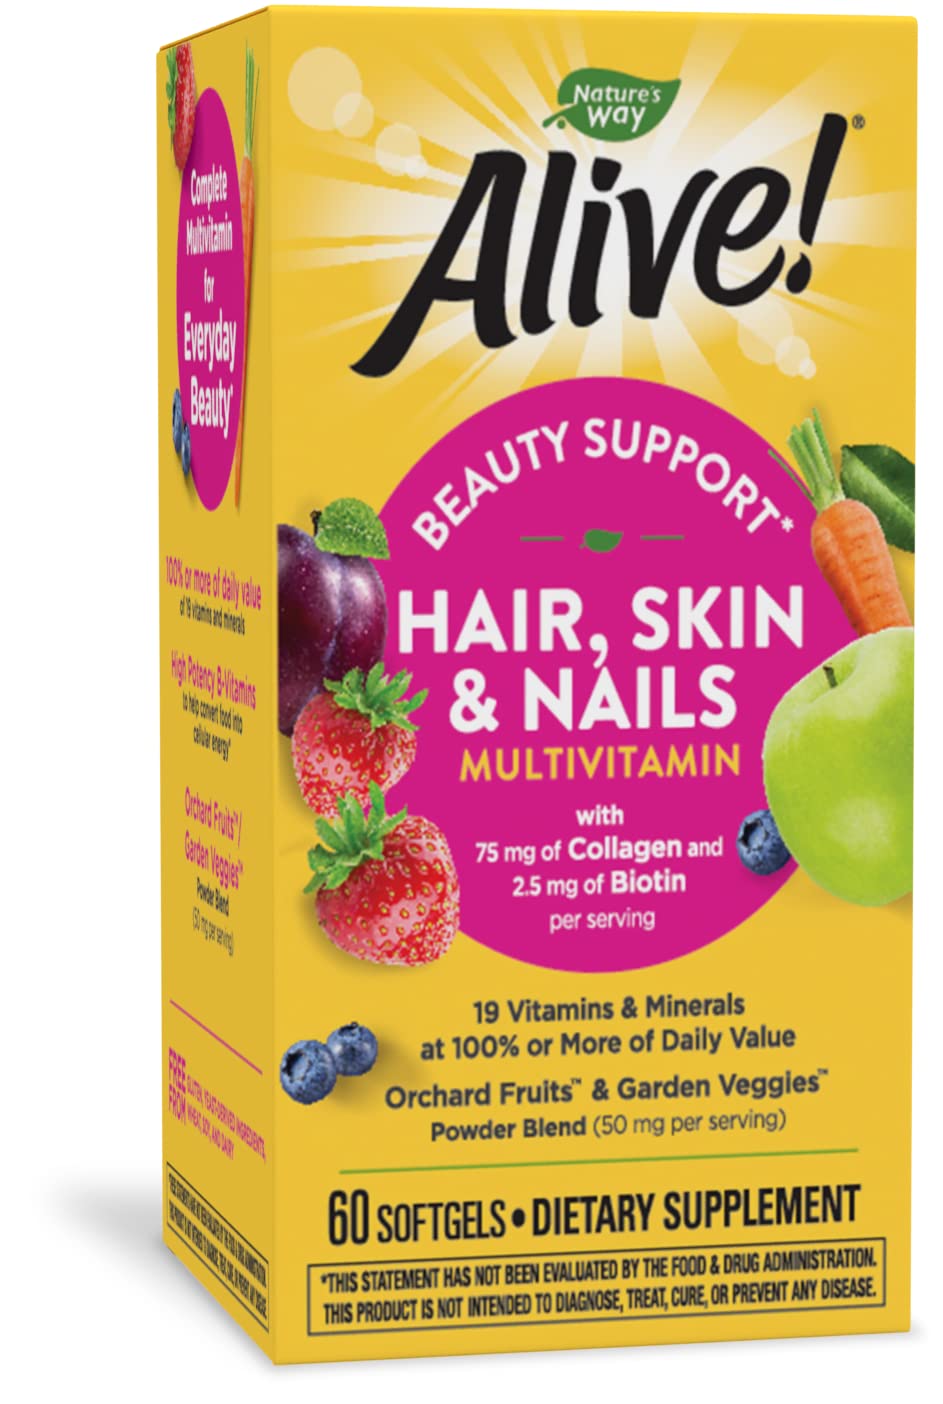 Mua Nature's Way Alive! Hair, Skin & Nails Multivitamin with Biotin and  Collagen, 60 Softgels trên Amazon Mỹ chính hãng 2023 | Fado